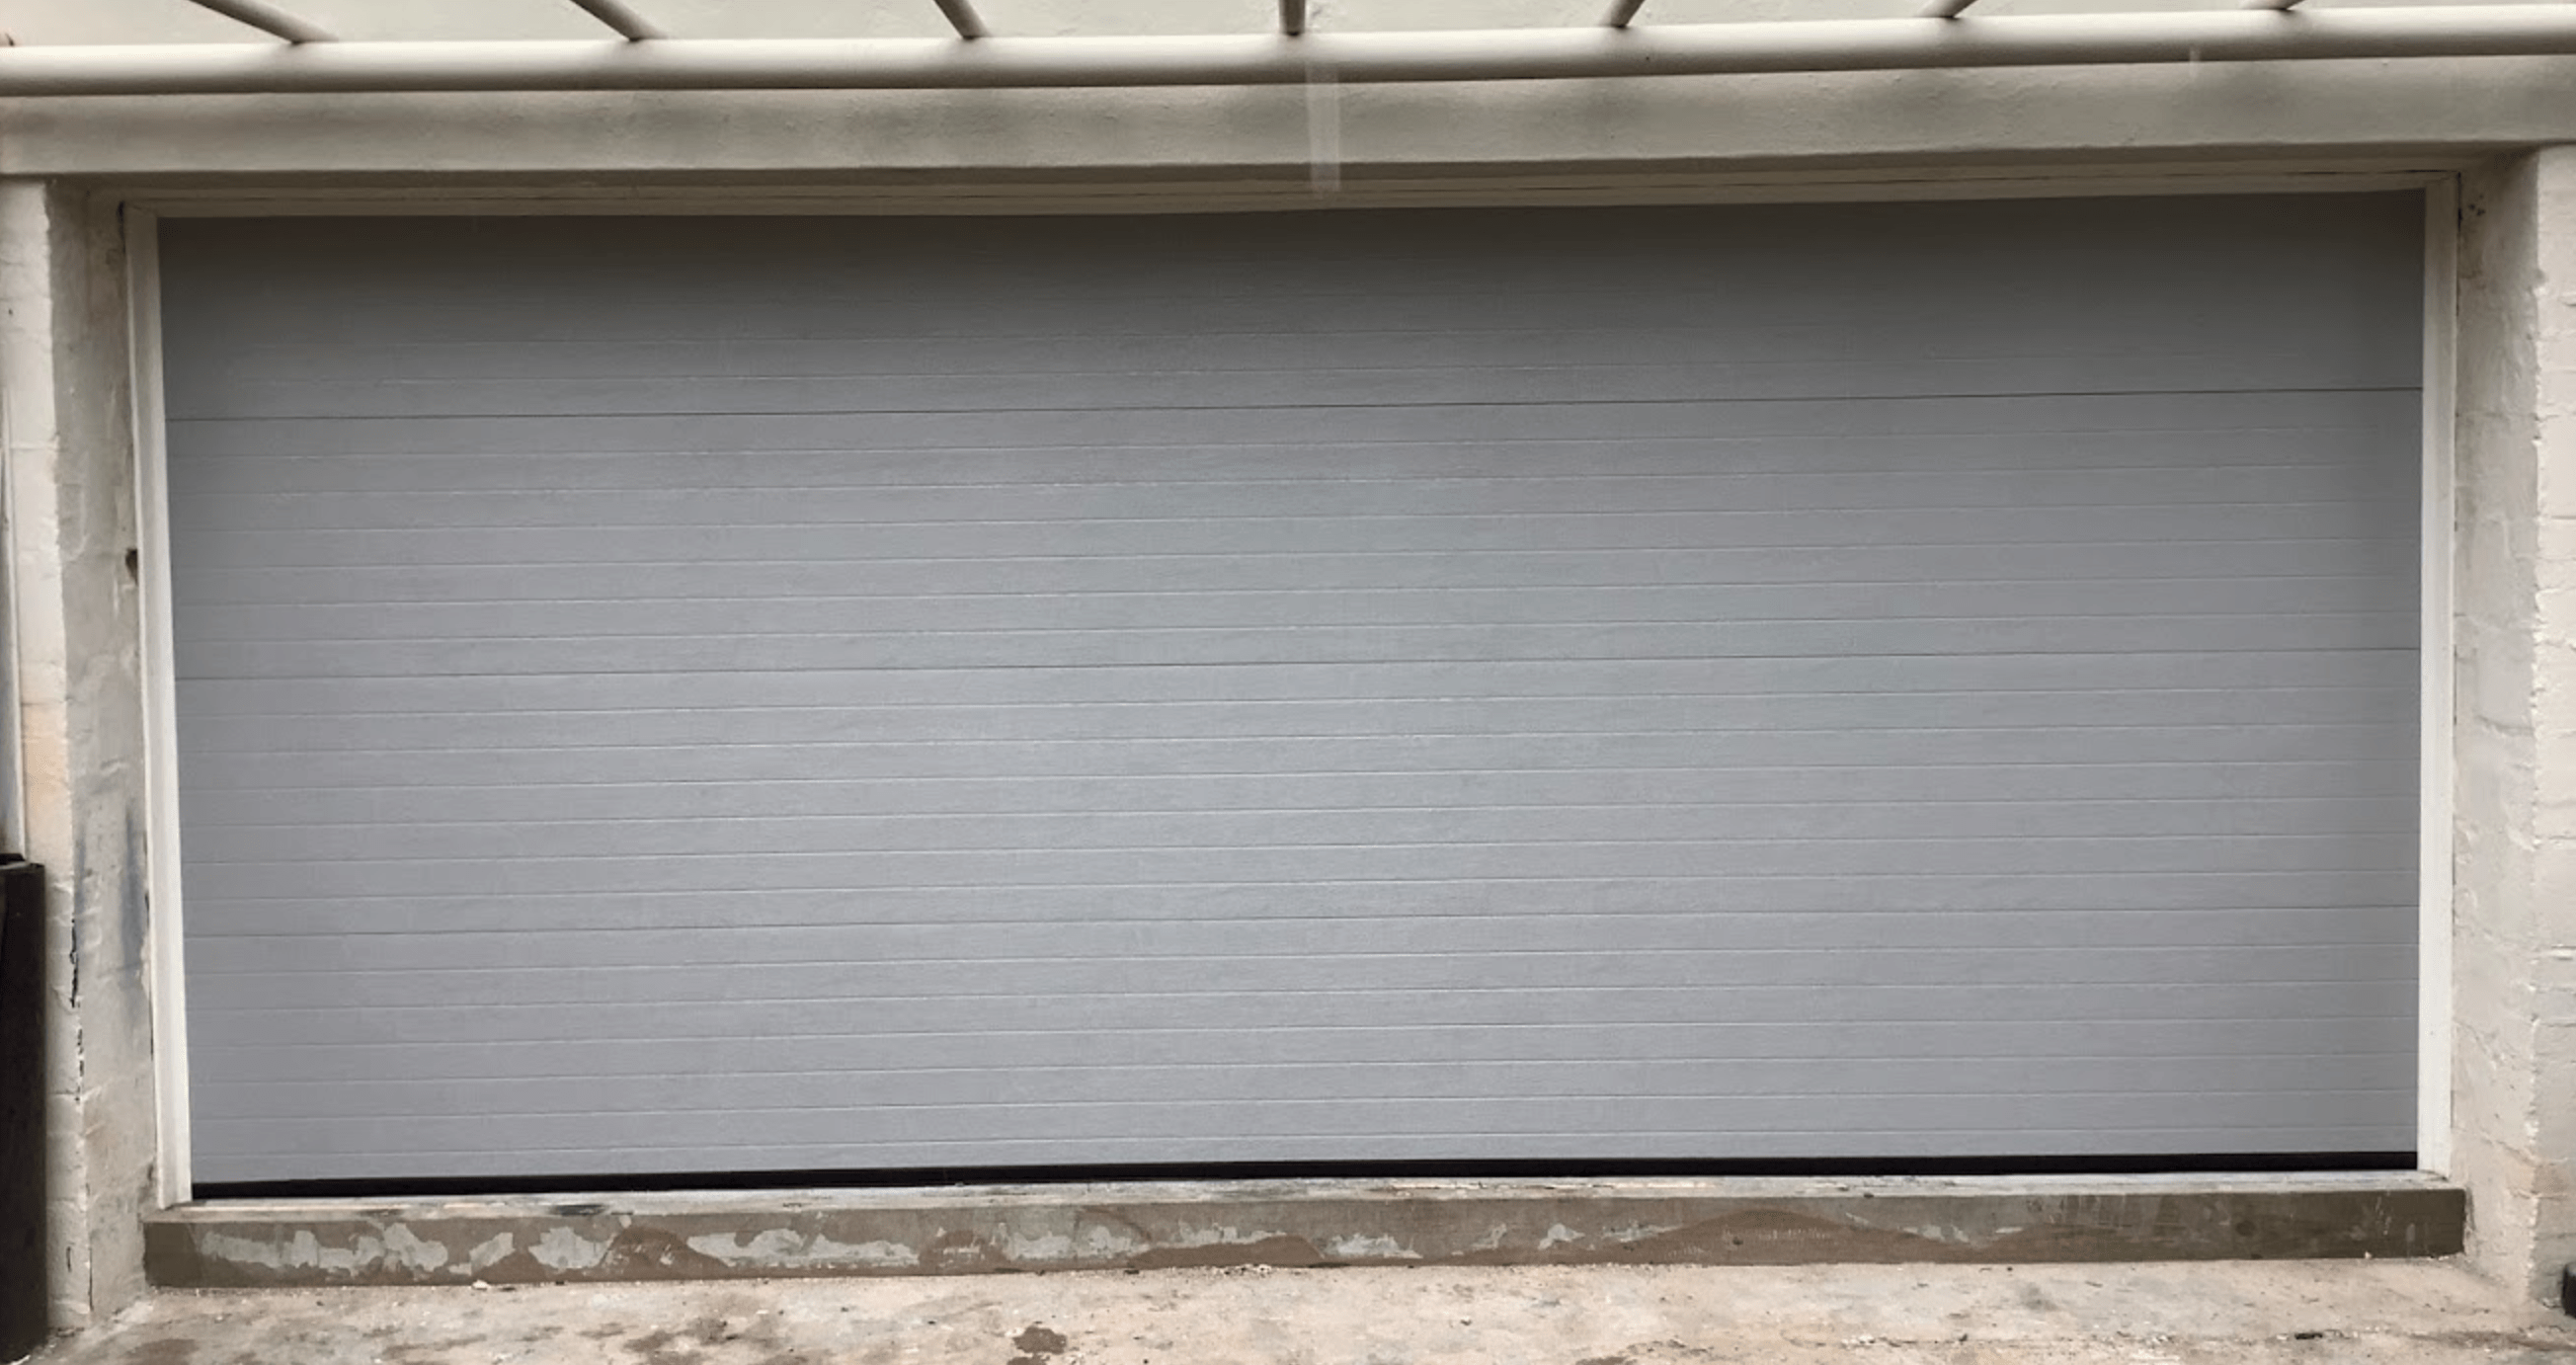 Flushed Panel Garage Door